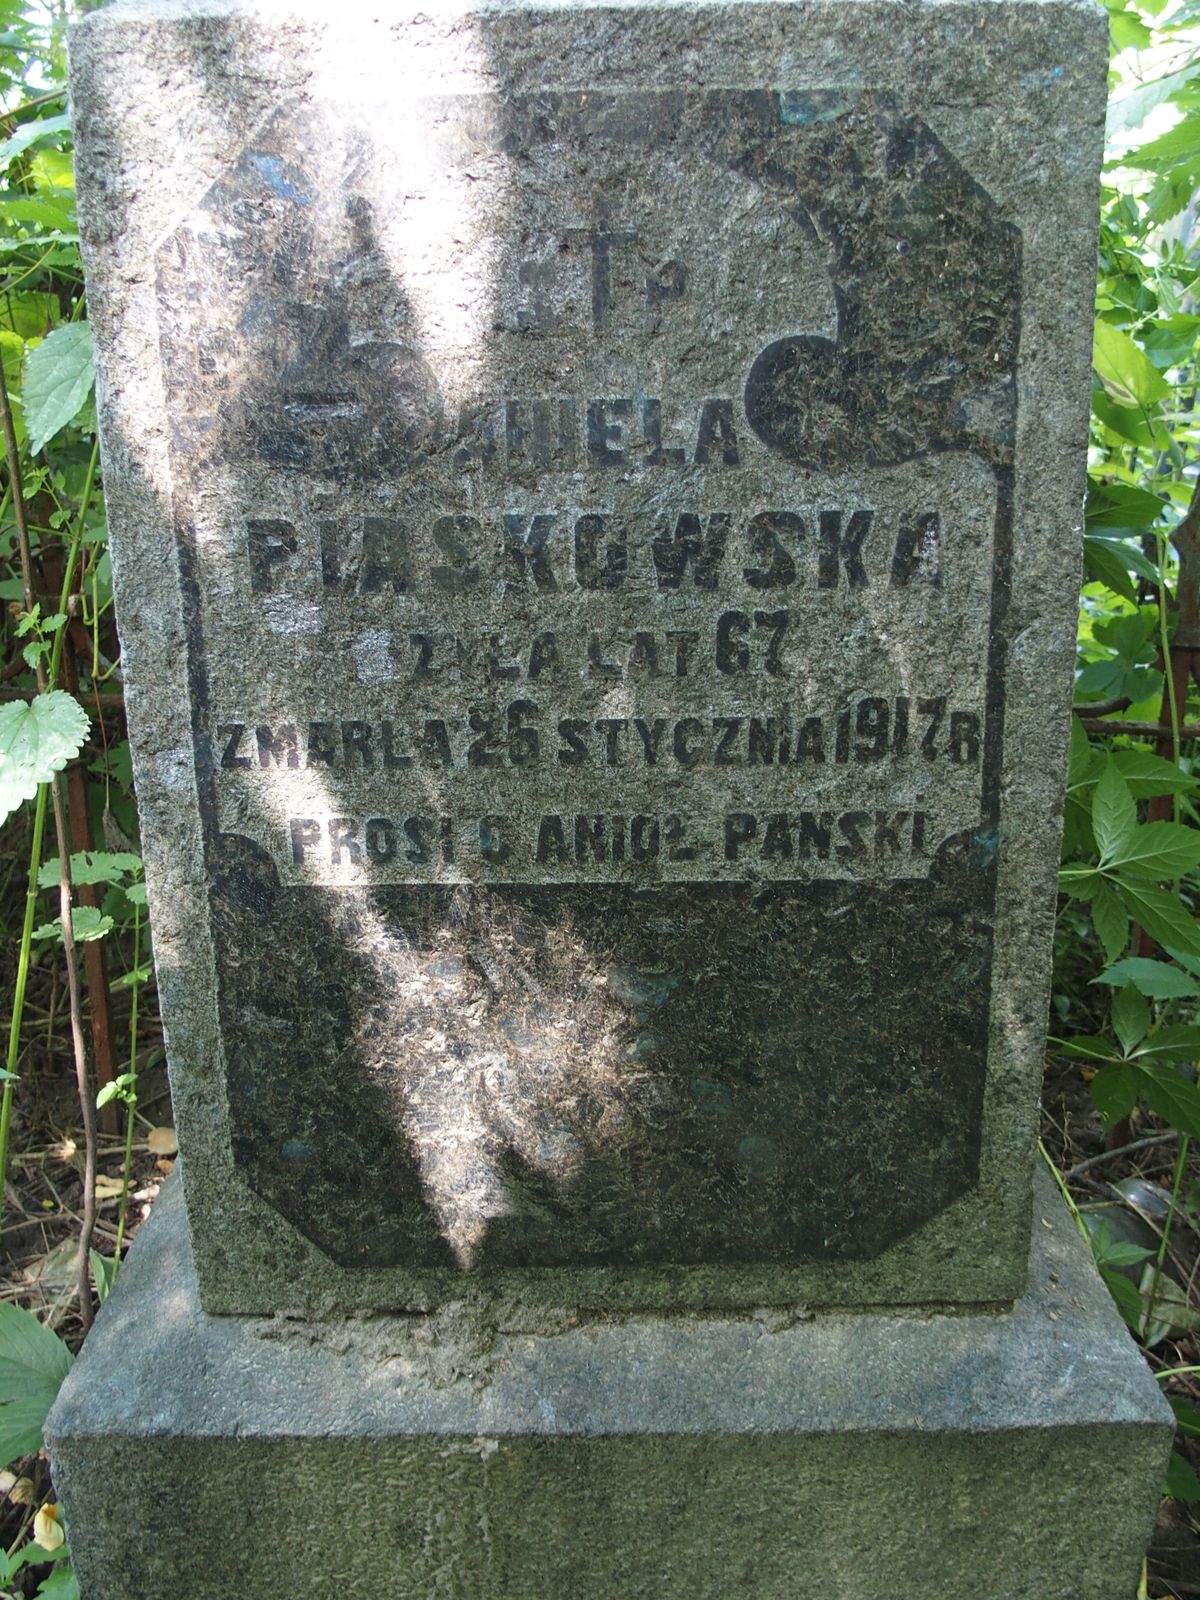 Inscription from the tombstone of Aniela Piaskowska